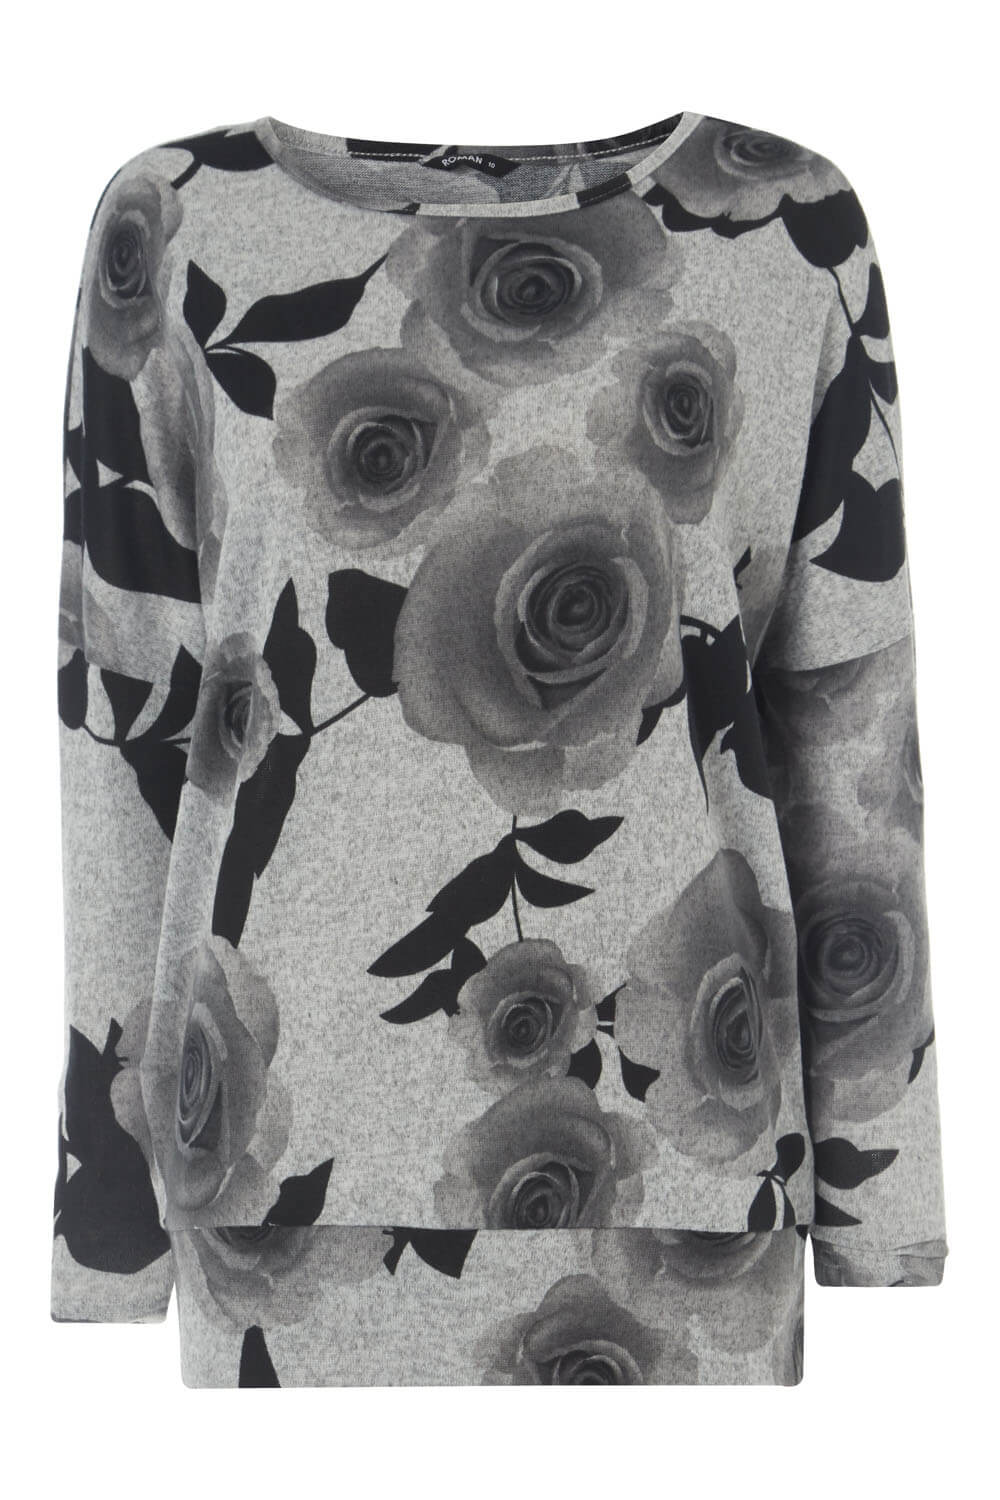 Grey Rose Floral Print Long Sleeve Top, Image 4 of 8